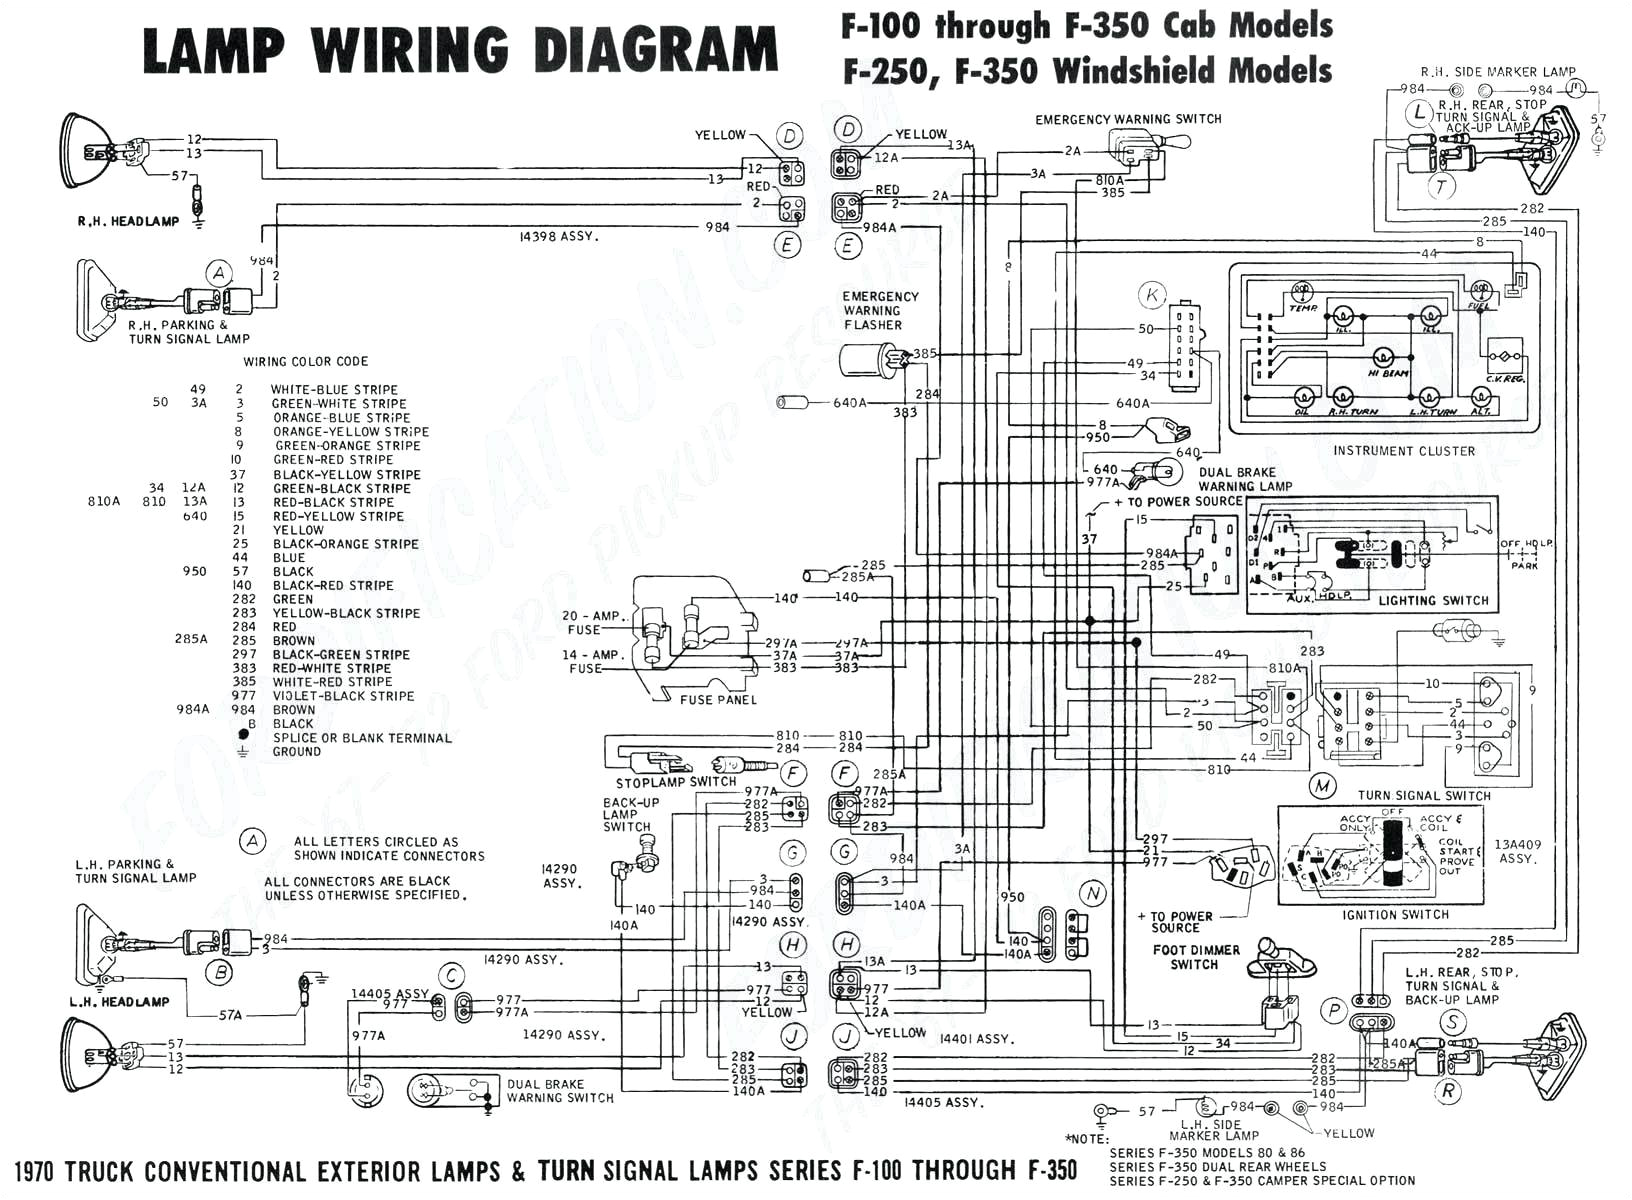 1999 honda accord radio wiring diagram simple also honda civic radio wiring diagram likewise 2002 honda civic of 1999 honda accord radio wiring diagram jpg